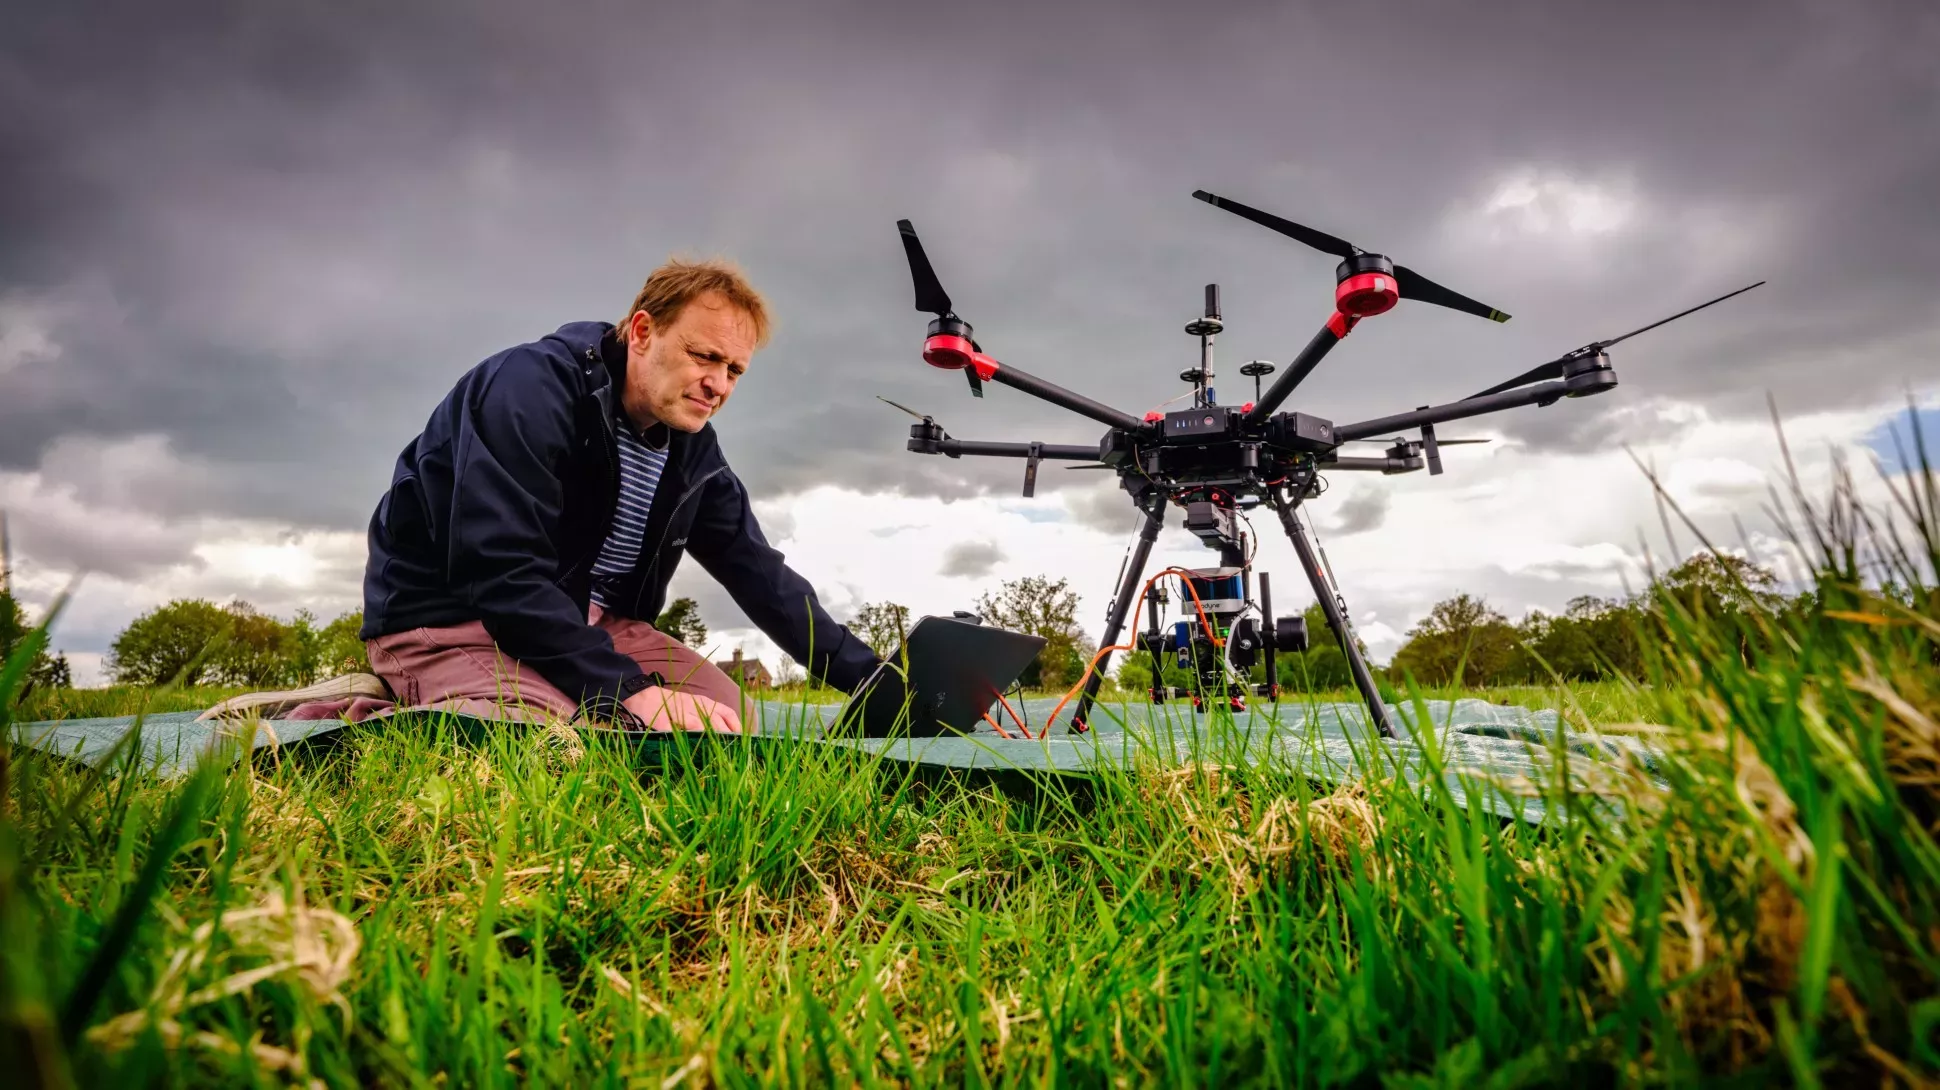 Kew scientist kneeling down in a grassy field with a drone